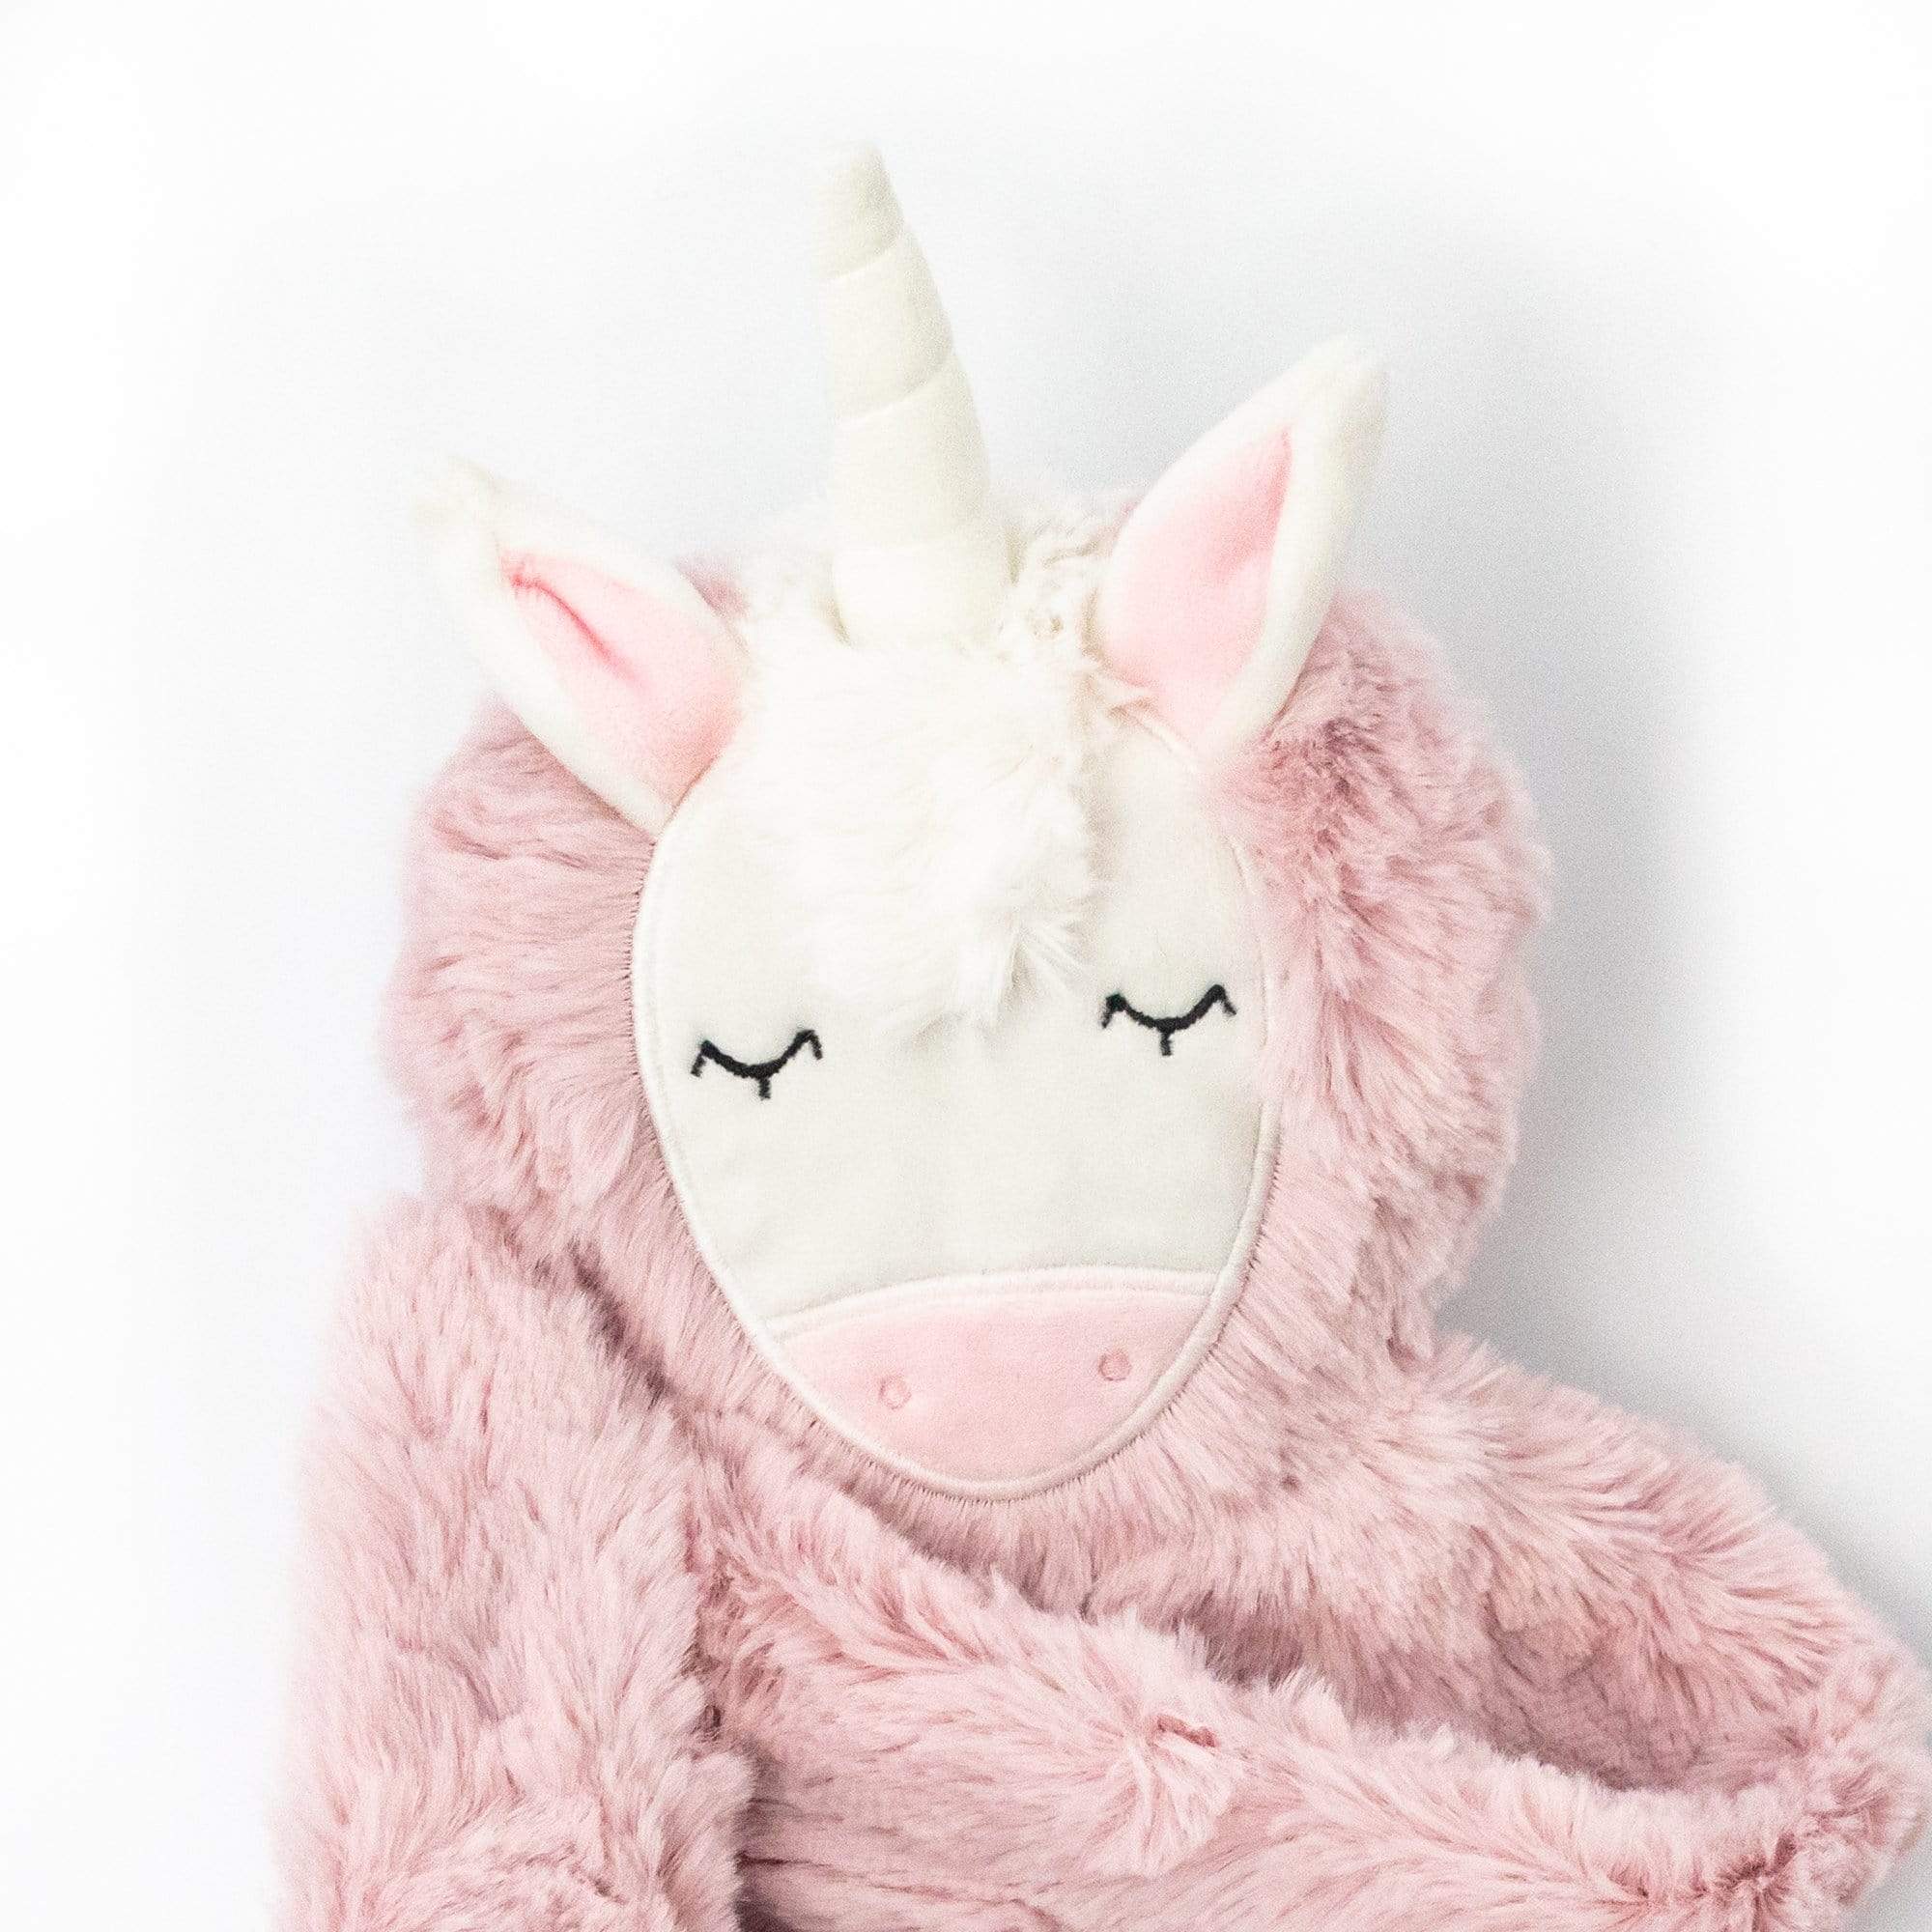 Unicorn Snuggler - View Product